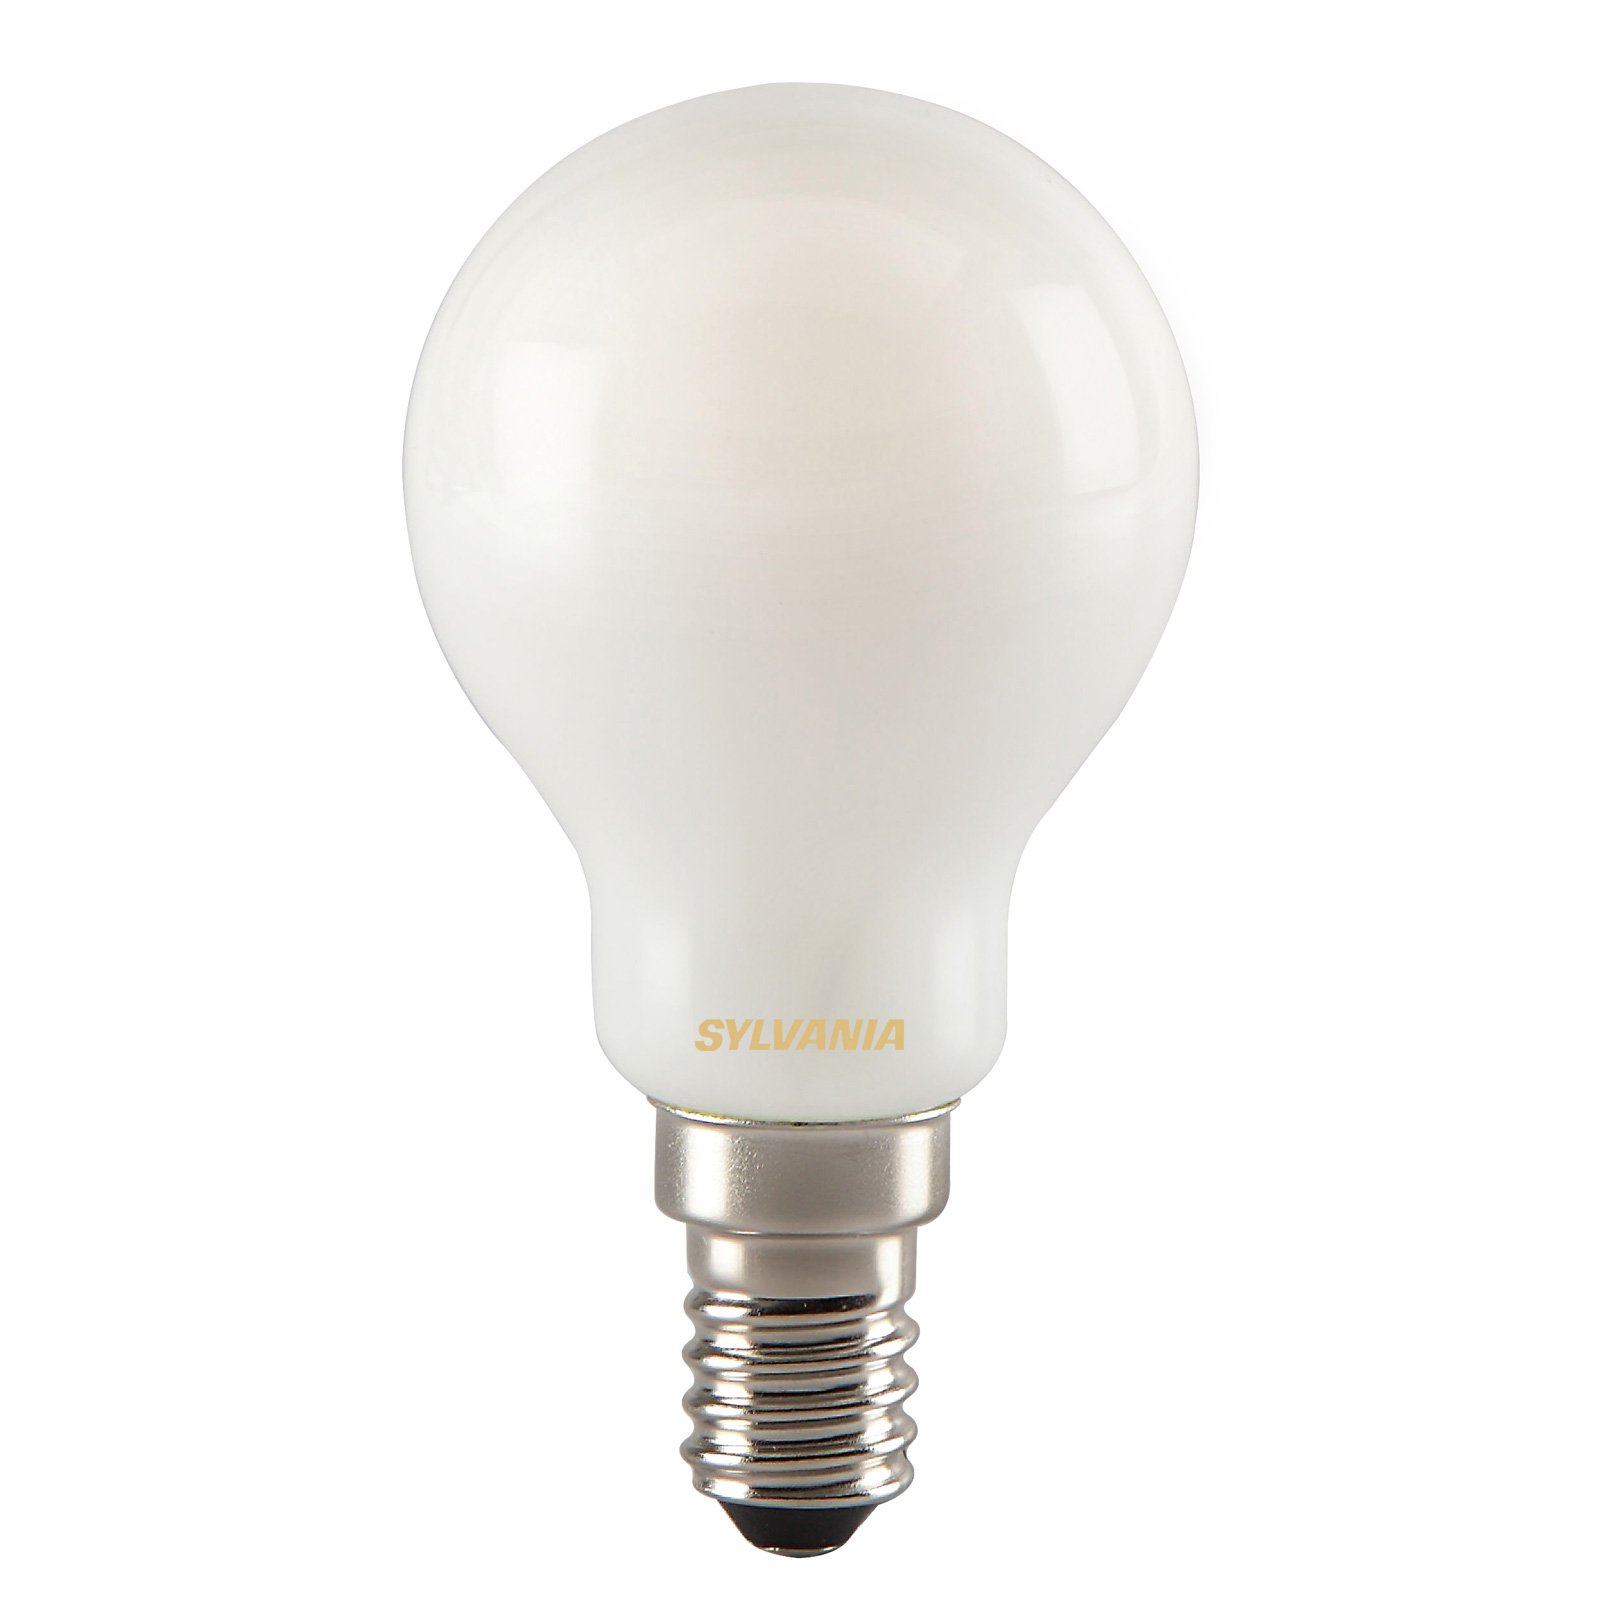 LED-pisaralamppu E14 ToLEDo RT 4,5 W 827 satiini